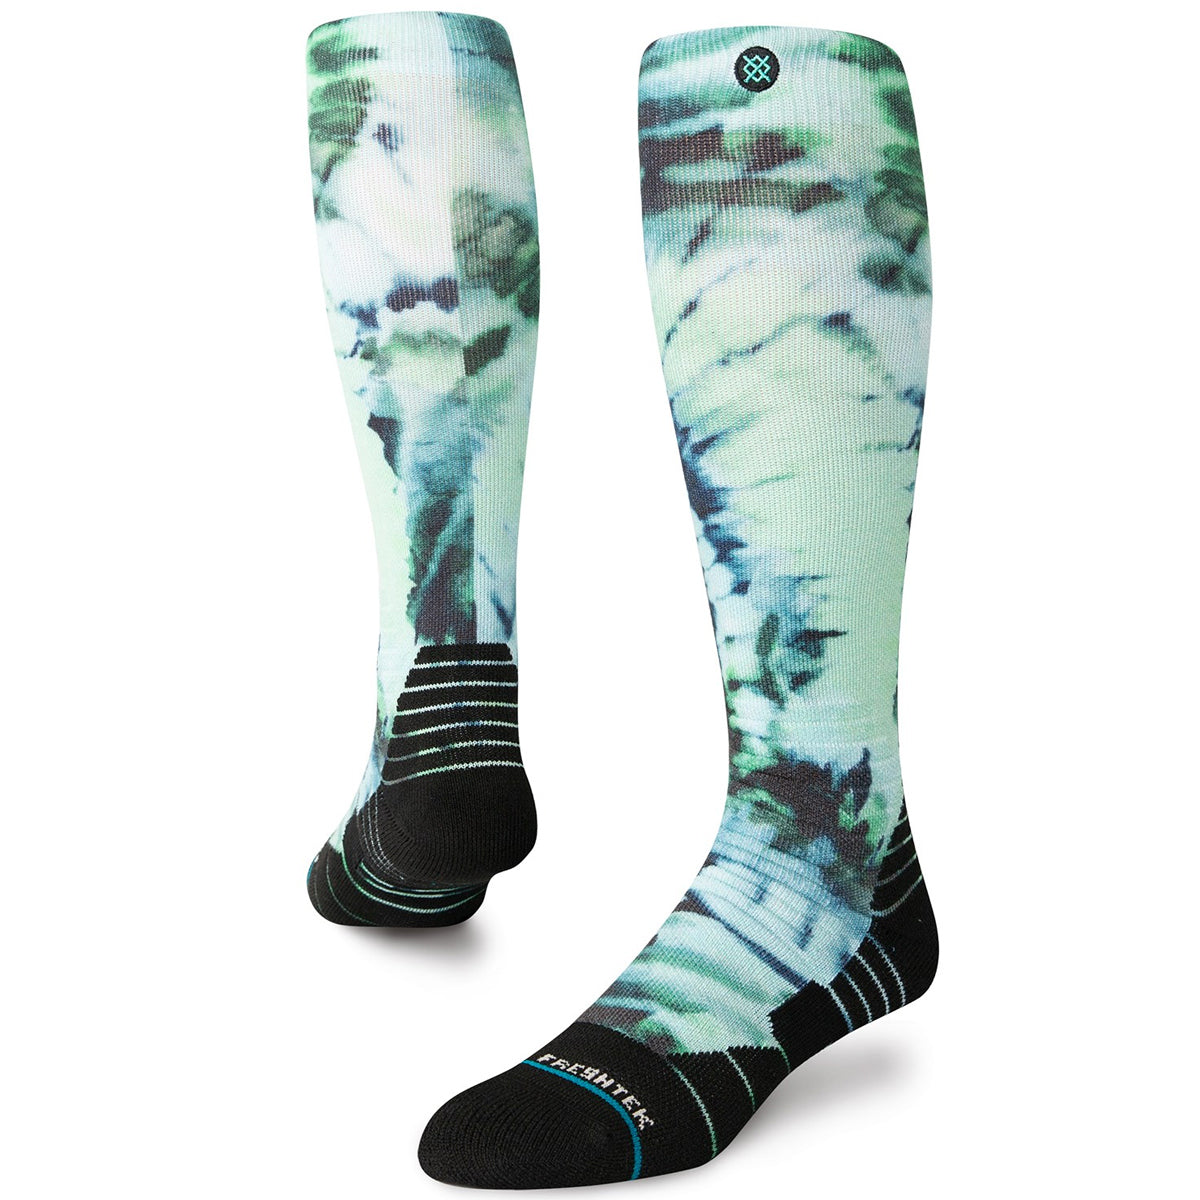 Stance Micro Dye Snowboard Socks - Teal image 1